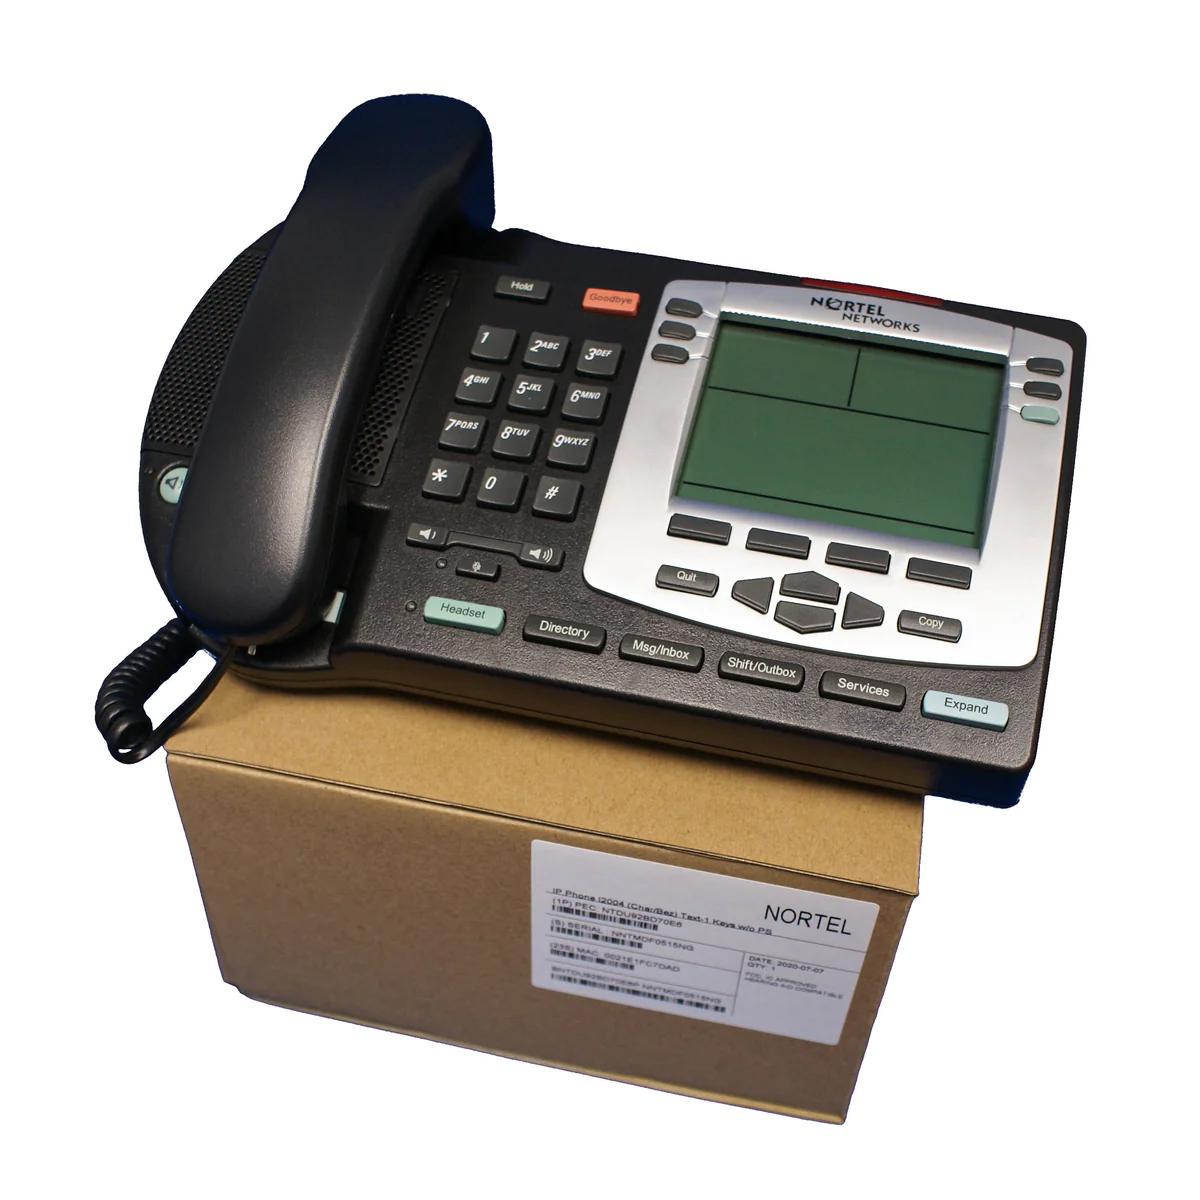 IP Phone 2004 Call Center for Nortel Communication Server 1000